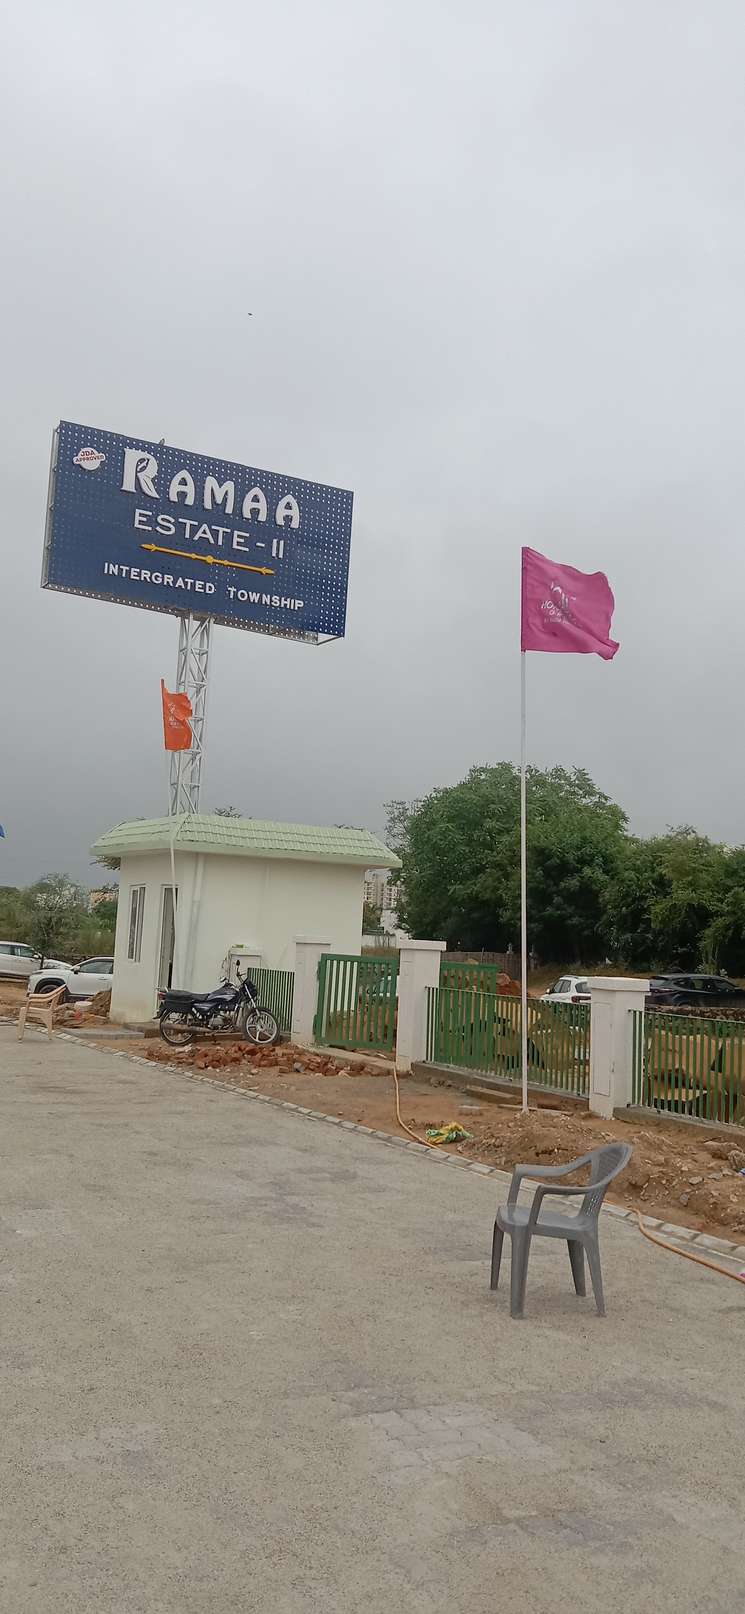 Ramaa Estate I - Ii Integrated Township